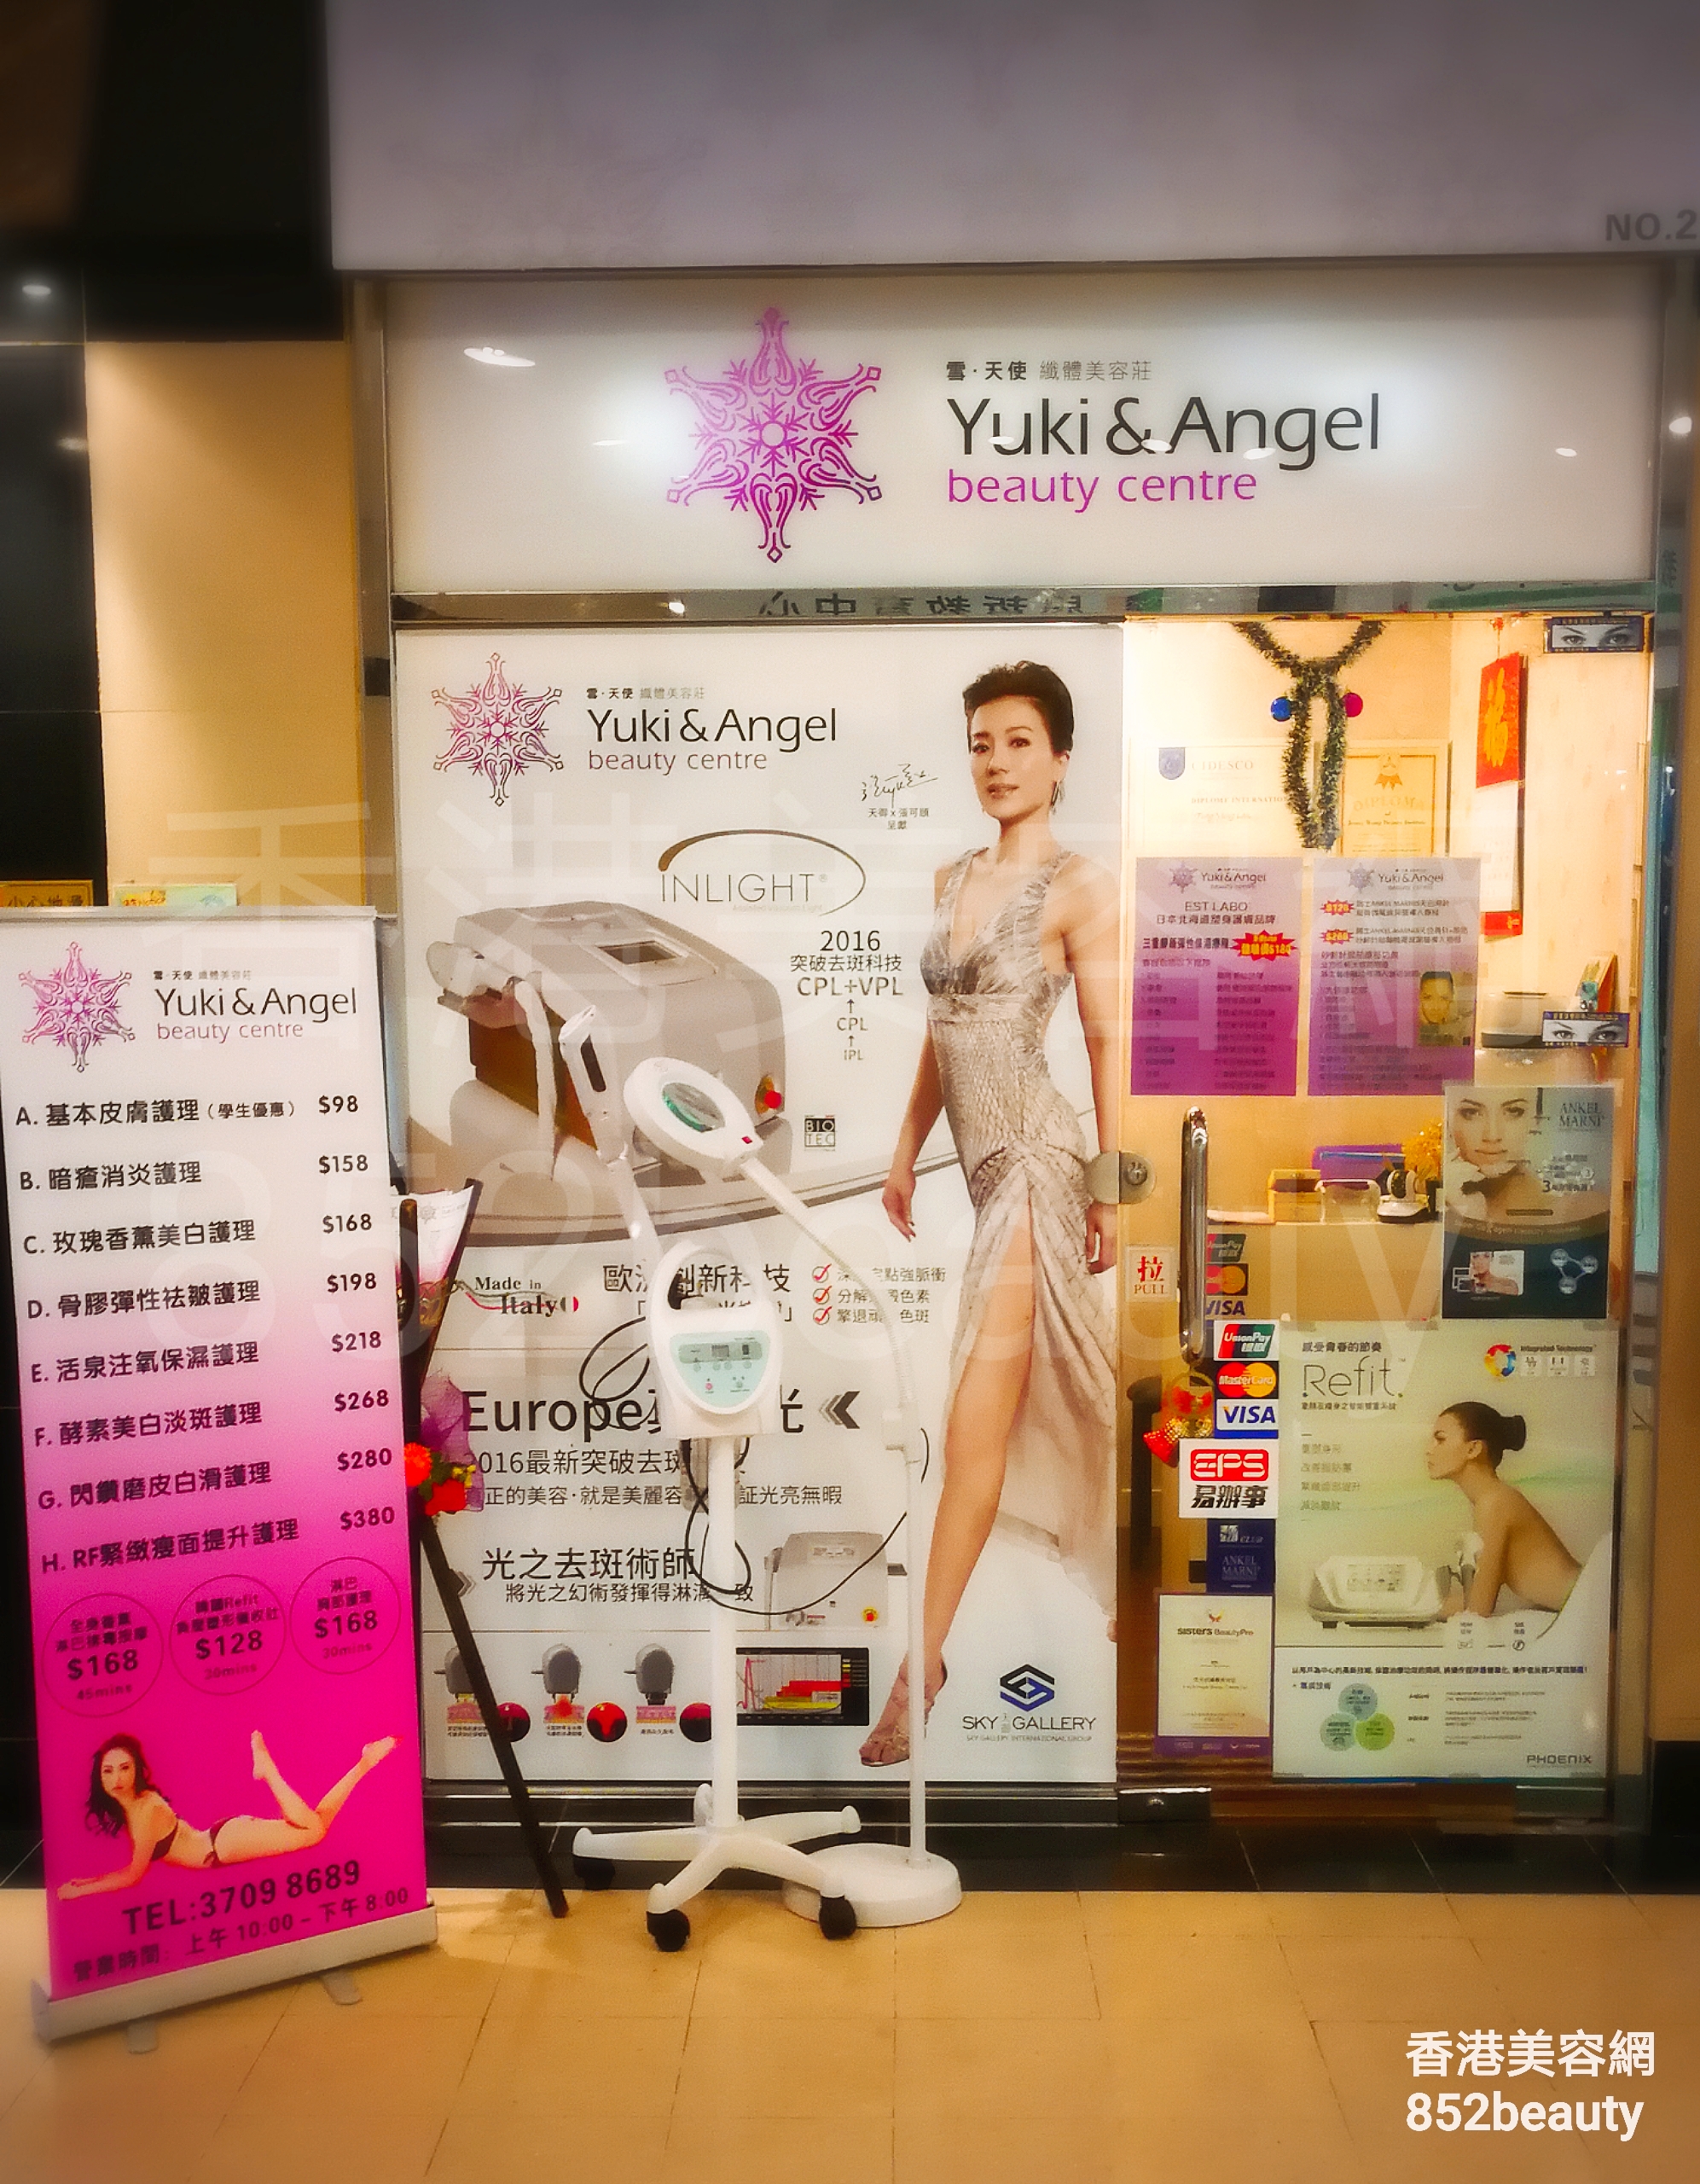 Eyelashes: Yuki & Angel beauty centre